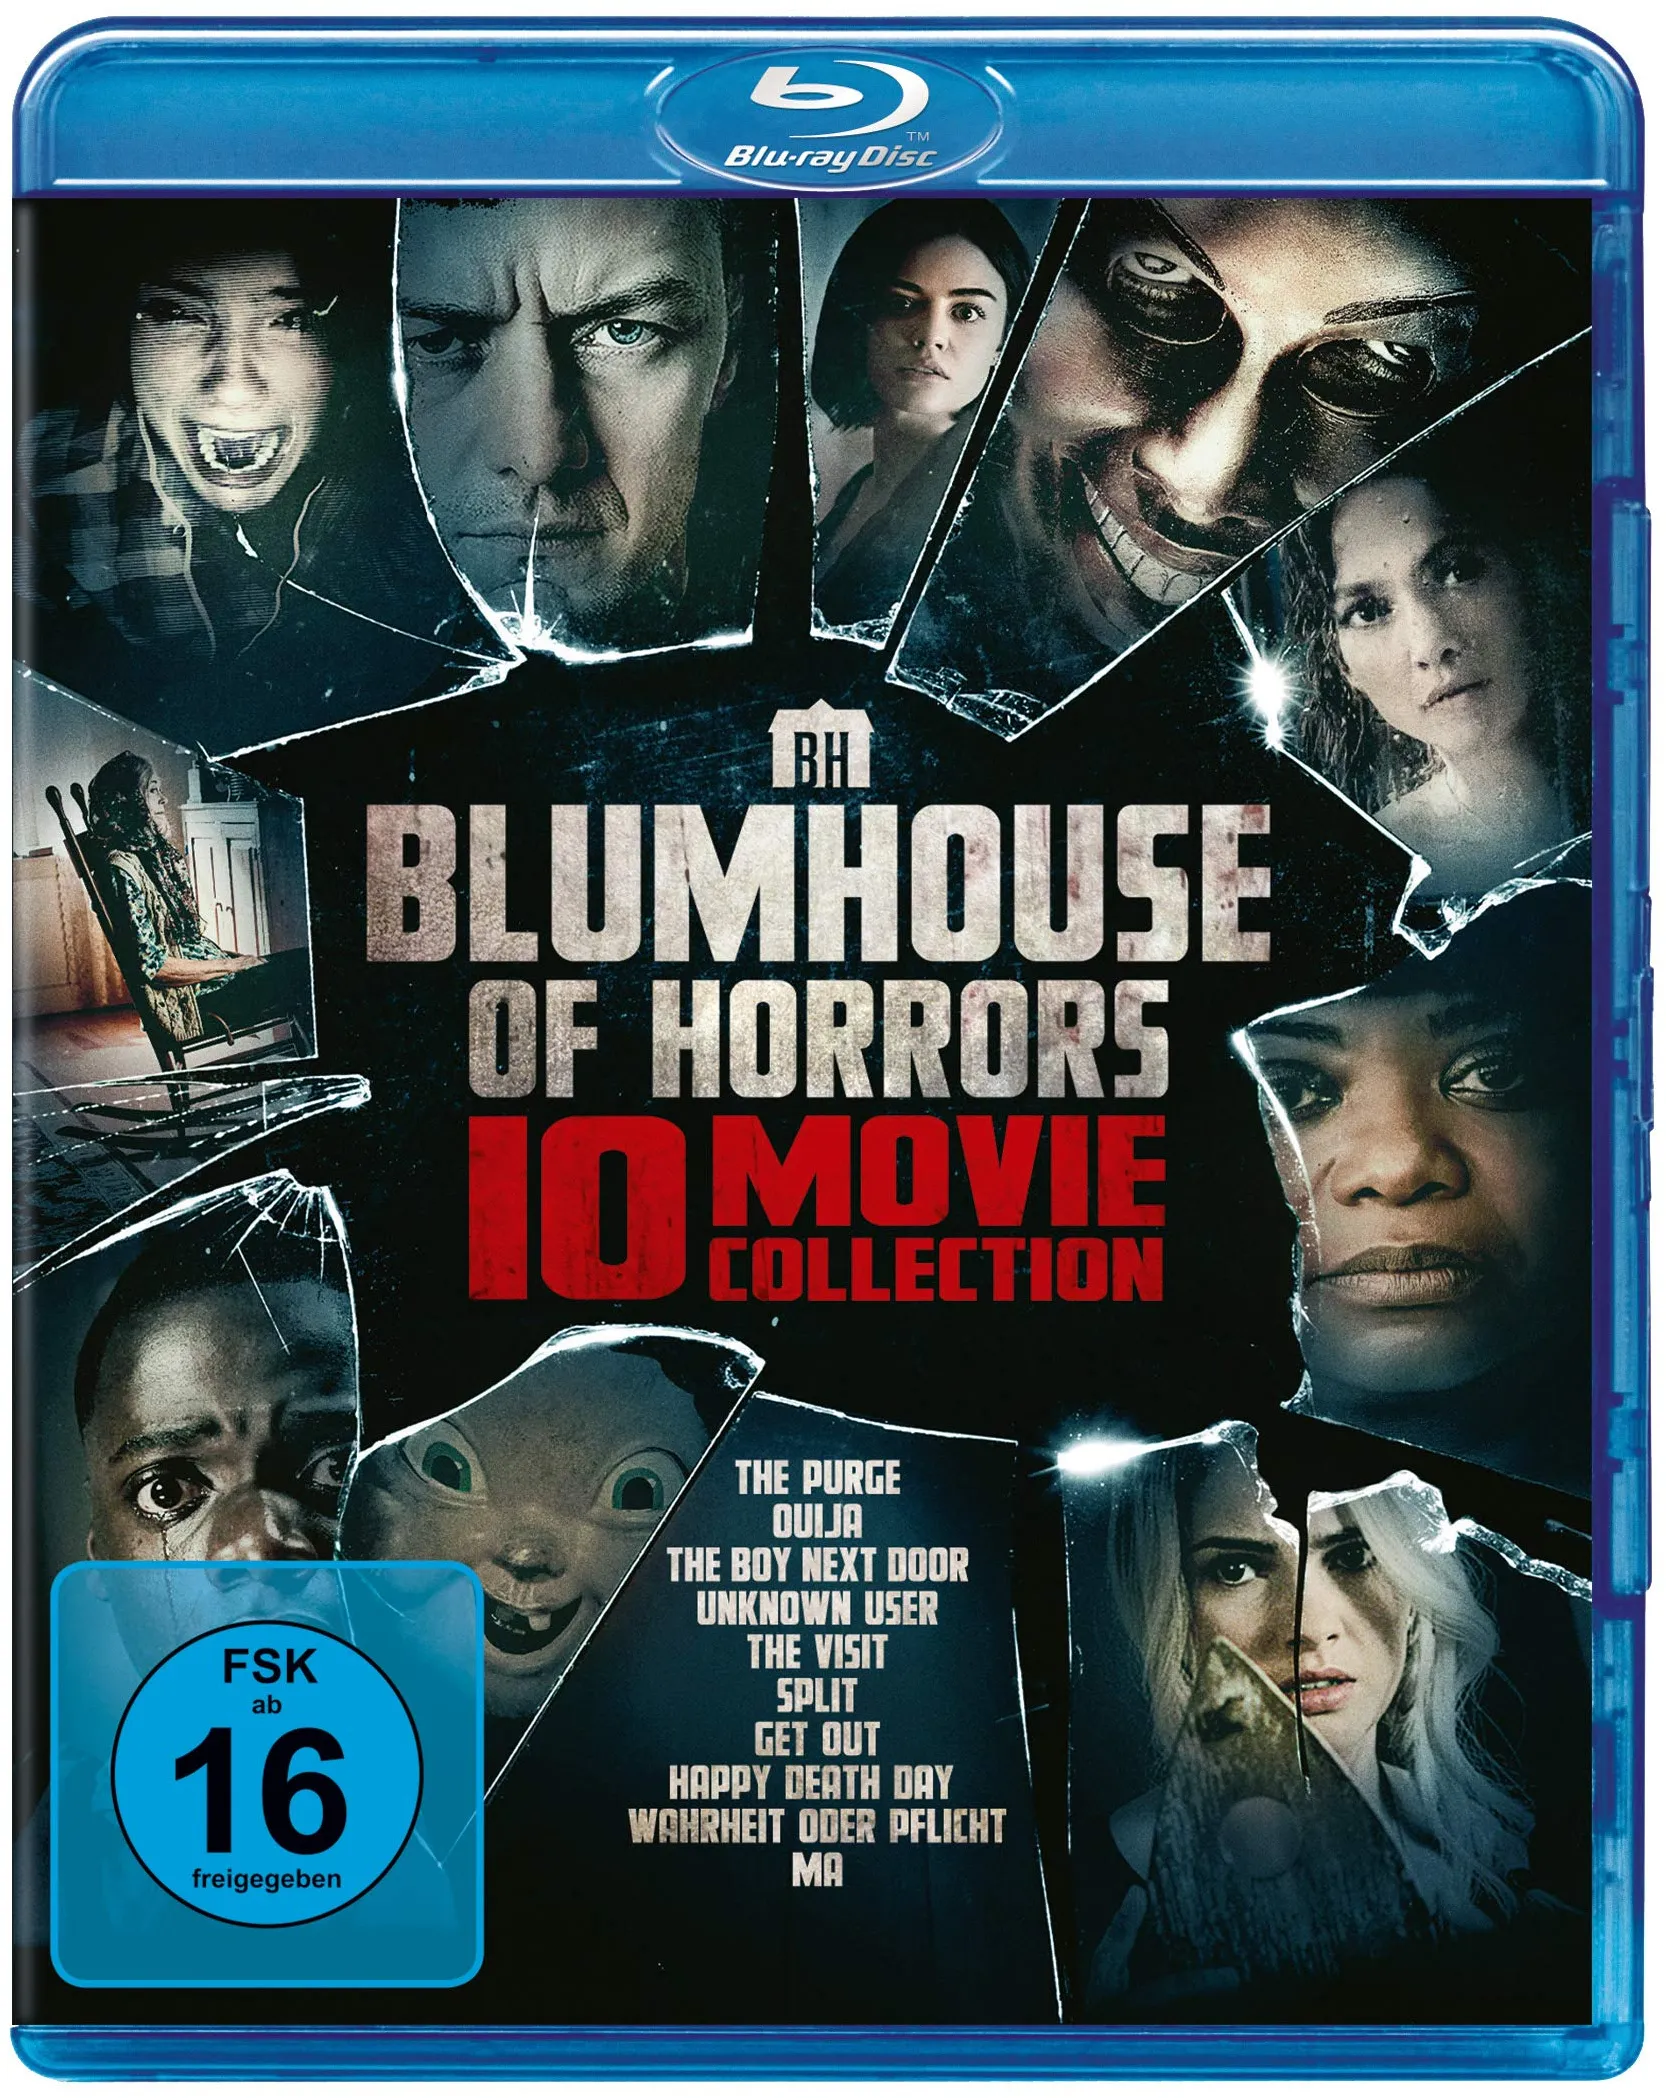 Blumhouse of Horrors - 10-Movie Collection [Blu-ray] (Neu differenzbesteuert)